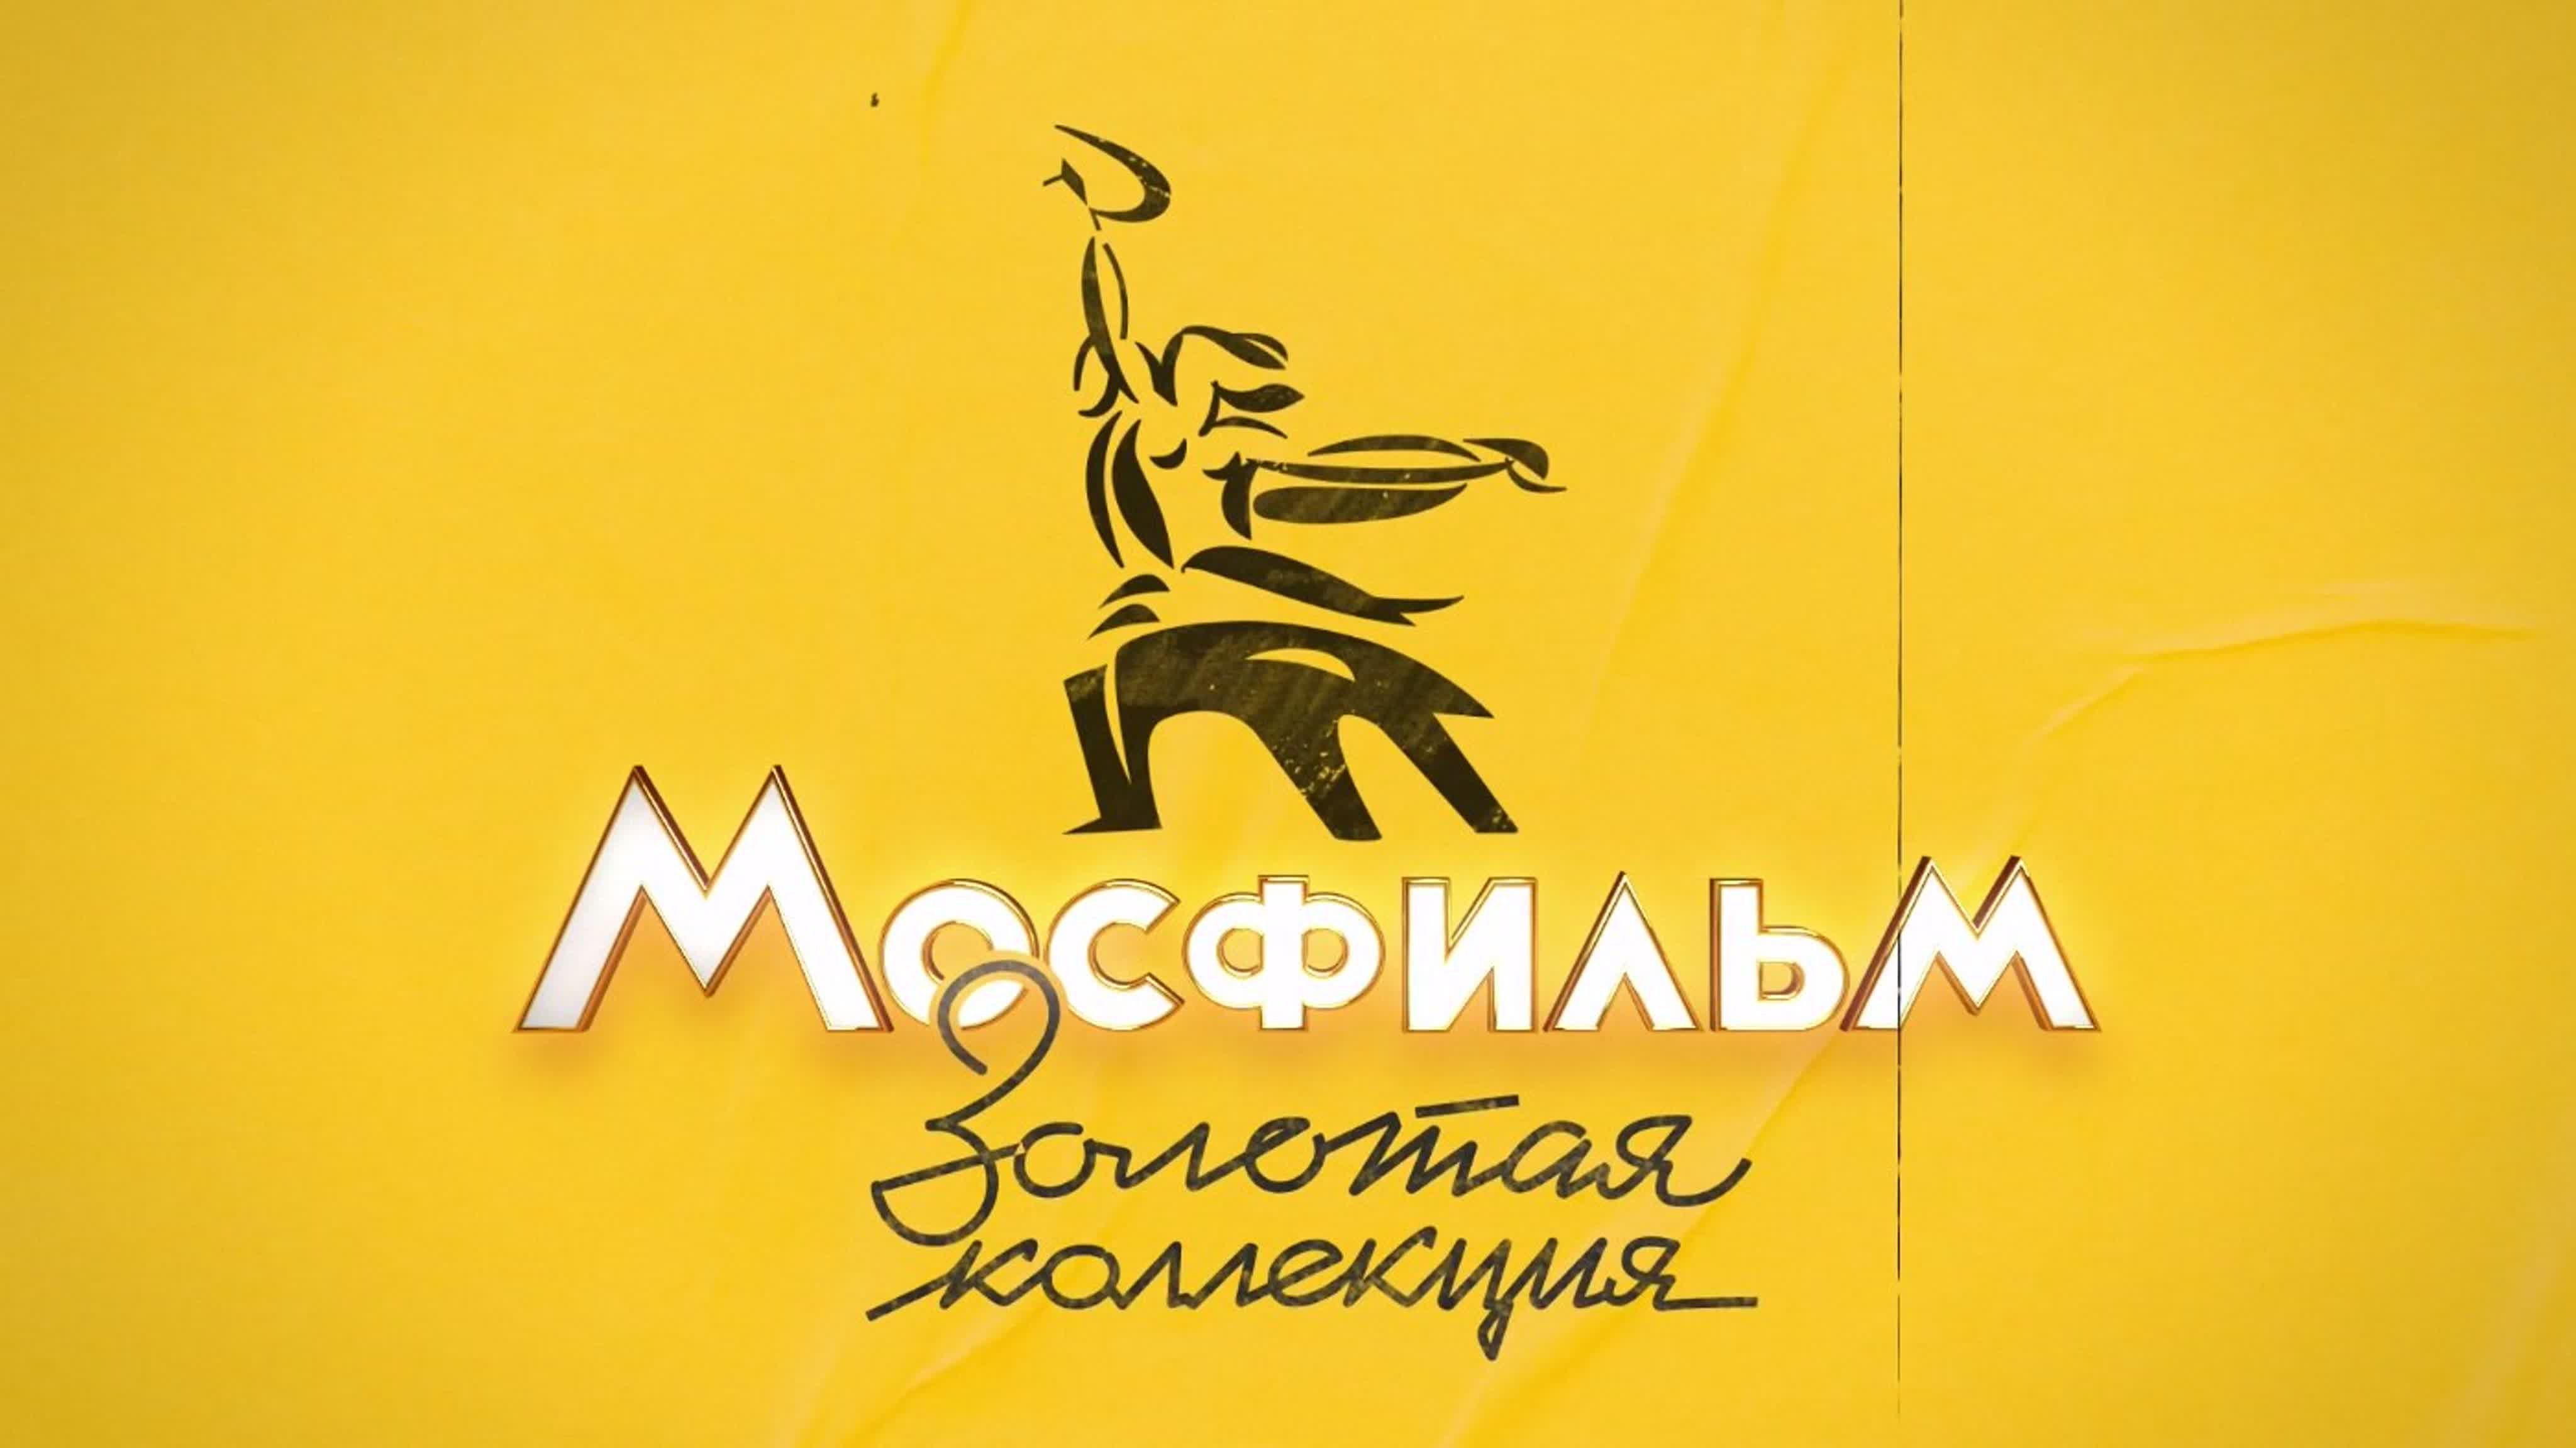 Мосфильм телепрограмма оренбург